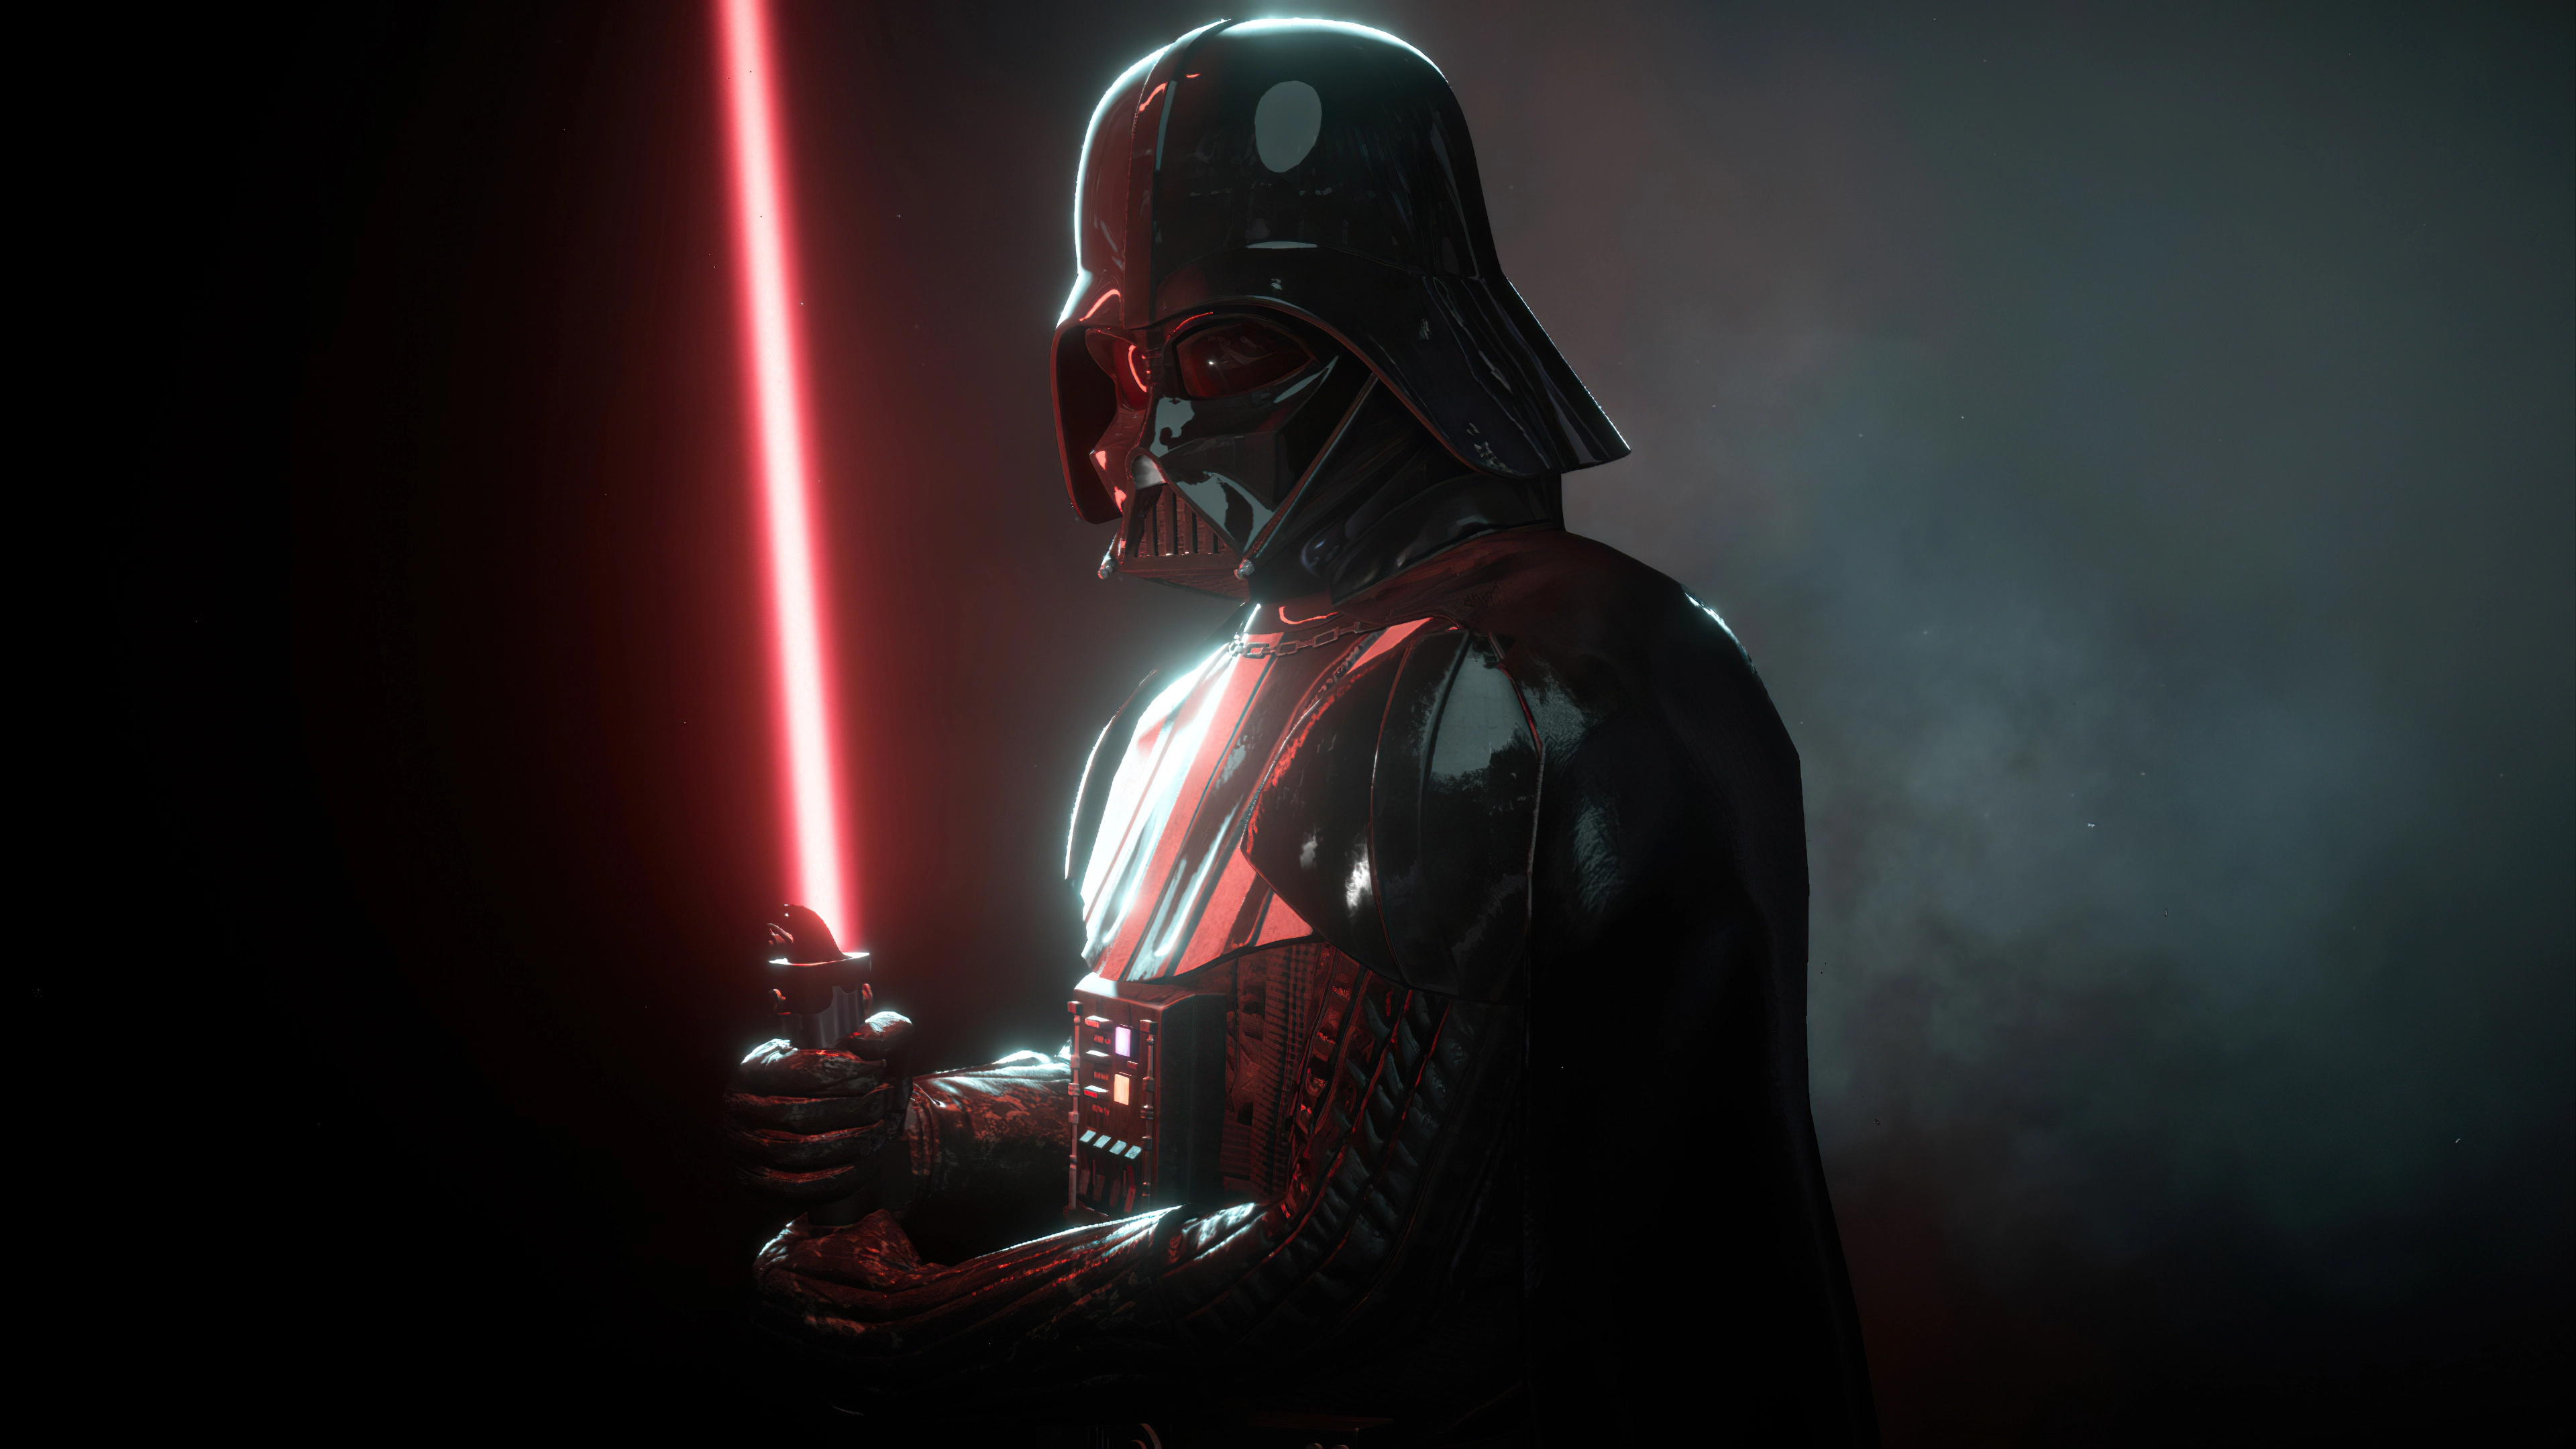 Darth Vader: Star Wars Battlefront II, Anakin Skywalker, Villain. 3840x2160 4K Wallpaper.